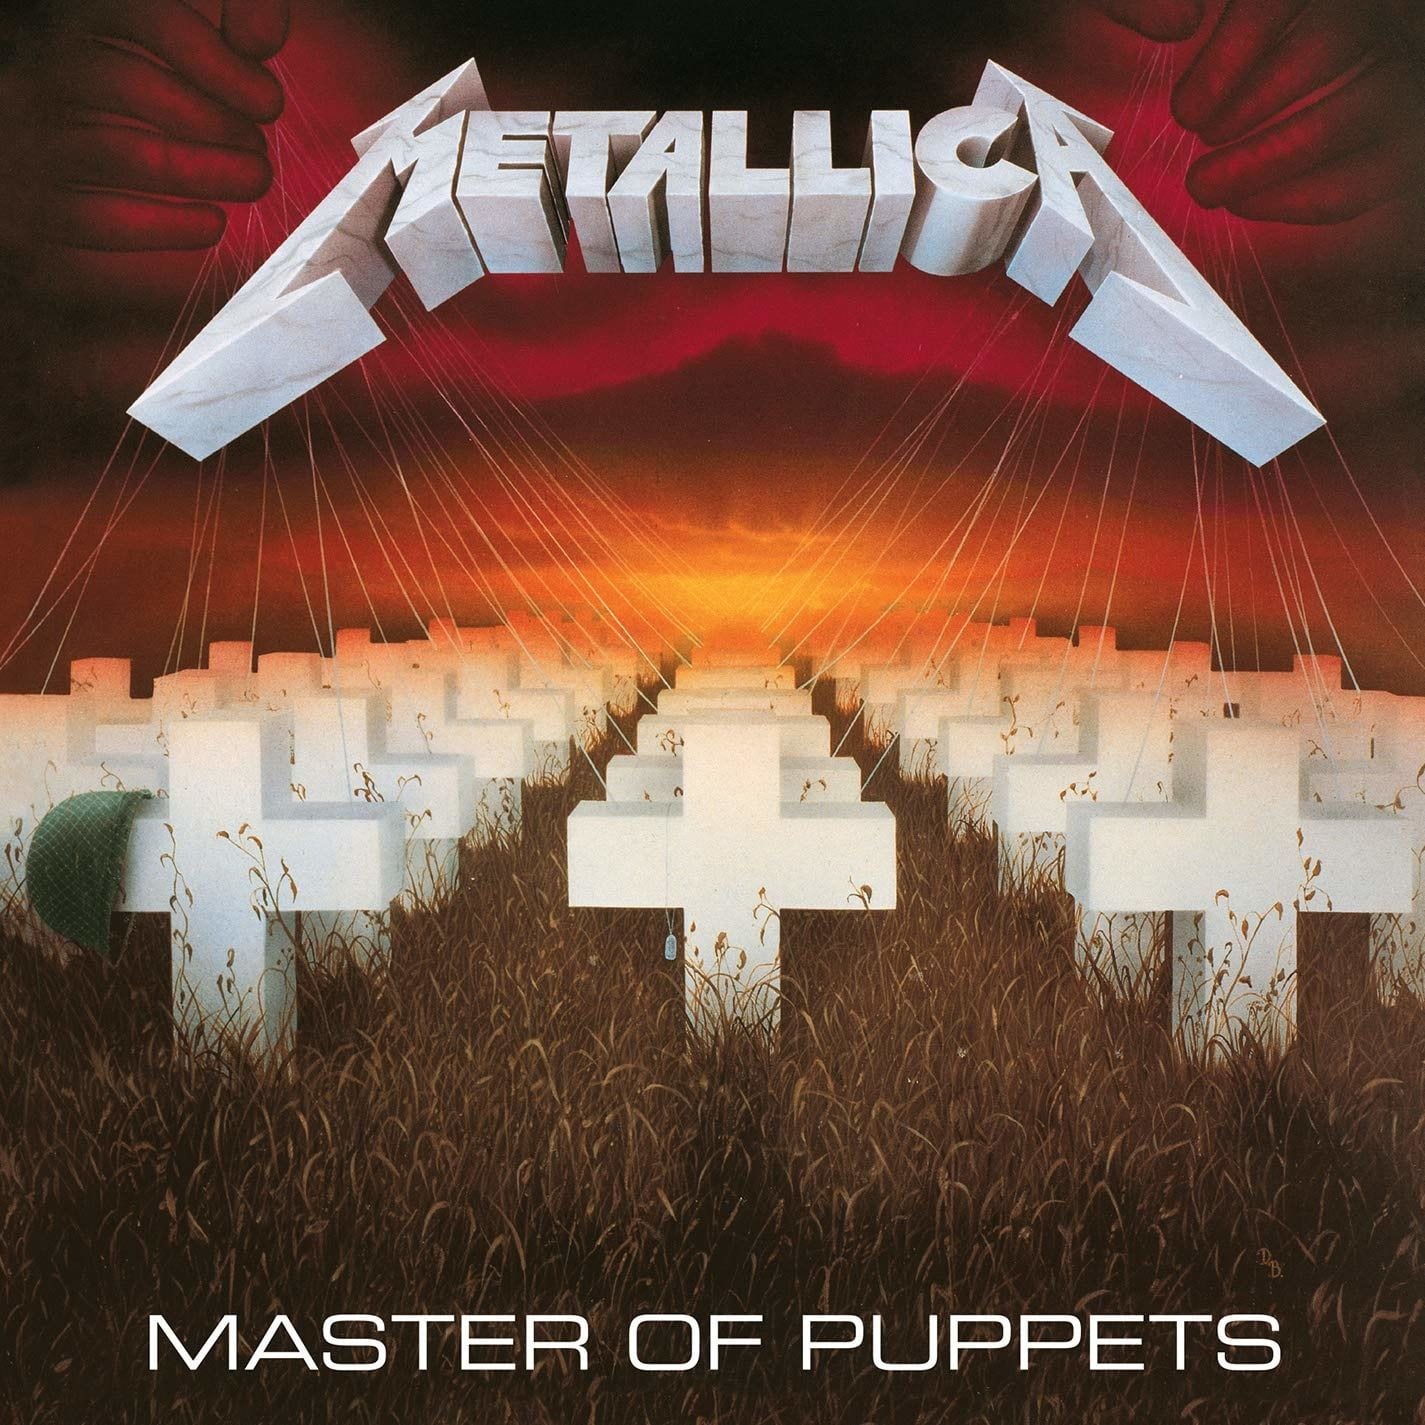 Counterbalance No. 158 Metallica’s ‘Master of Puppets’